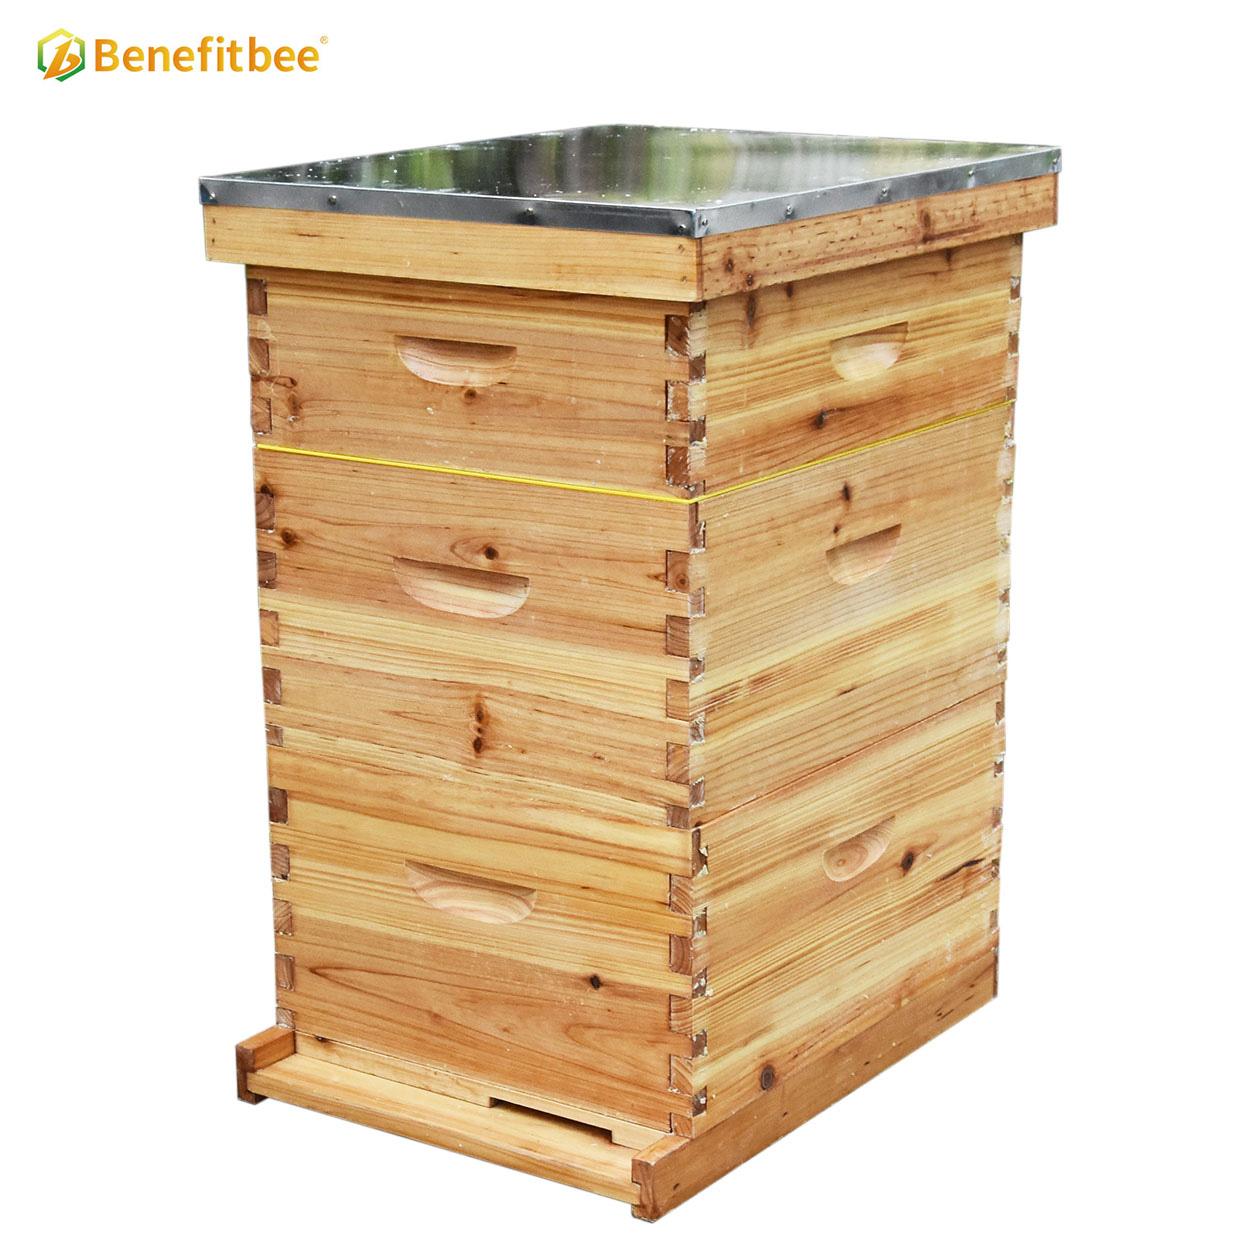 Benefitbee Langstroth Beehive Kit bee hives beekeeping bee hive kit with 10 frames